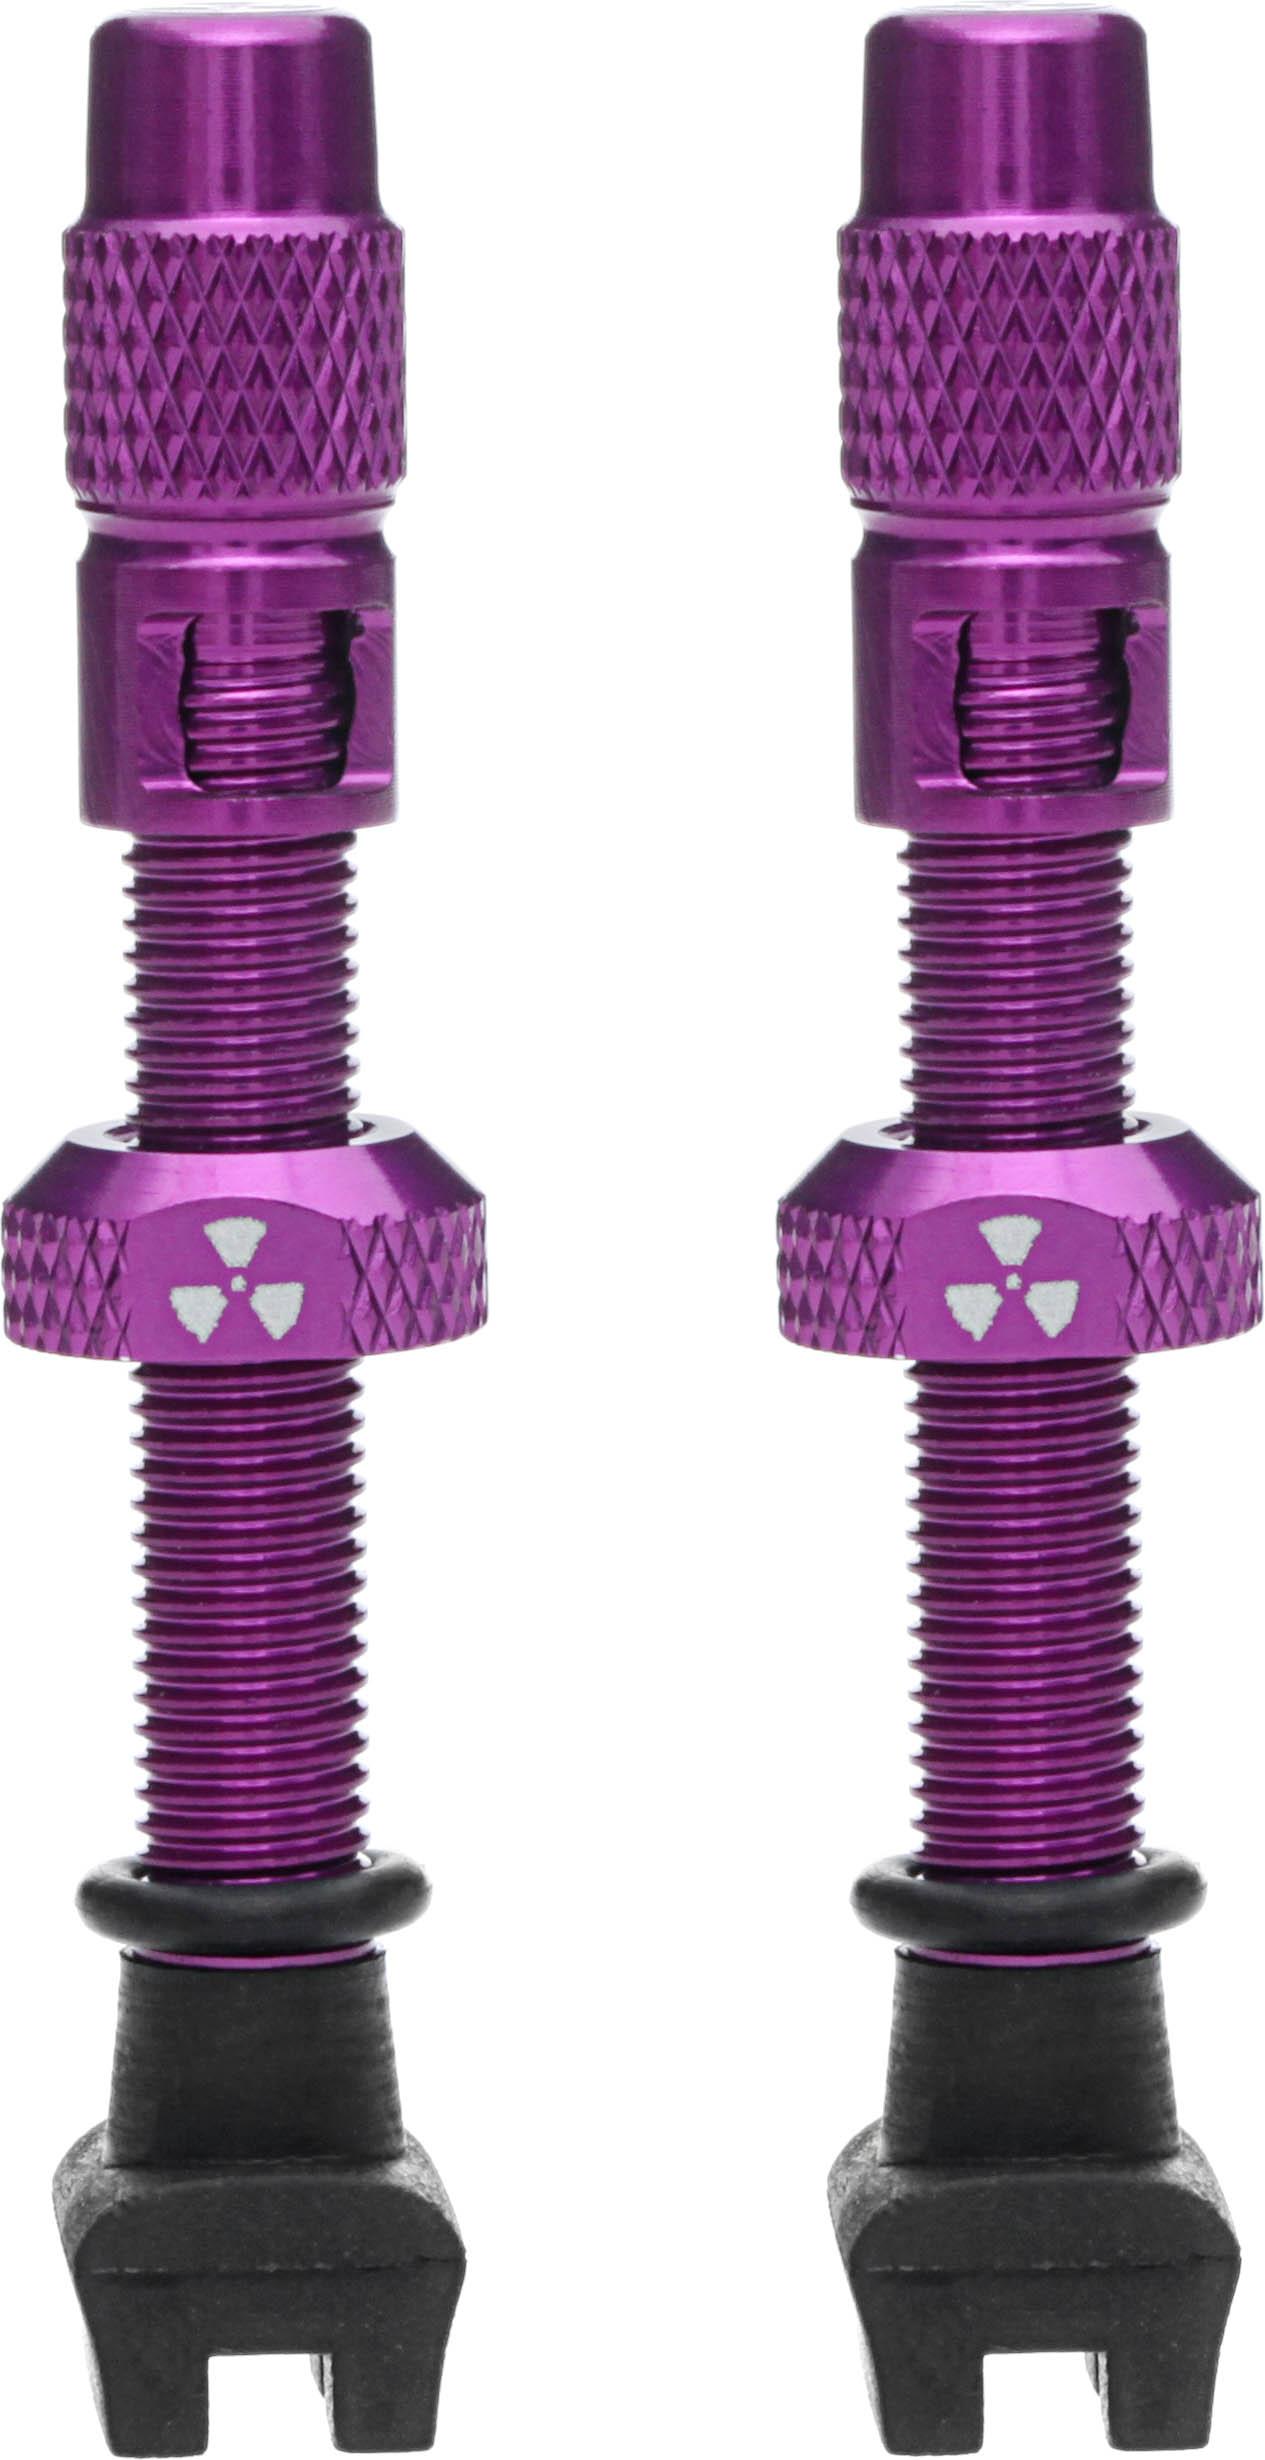 Nukeproof Universal Presta Tubeless Valves - Pair - Purple